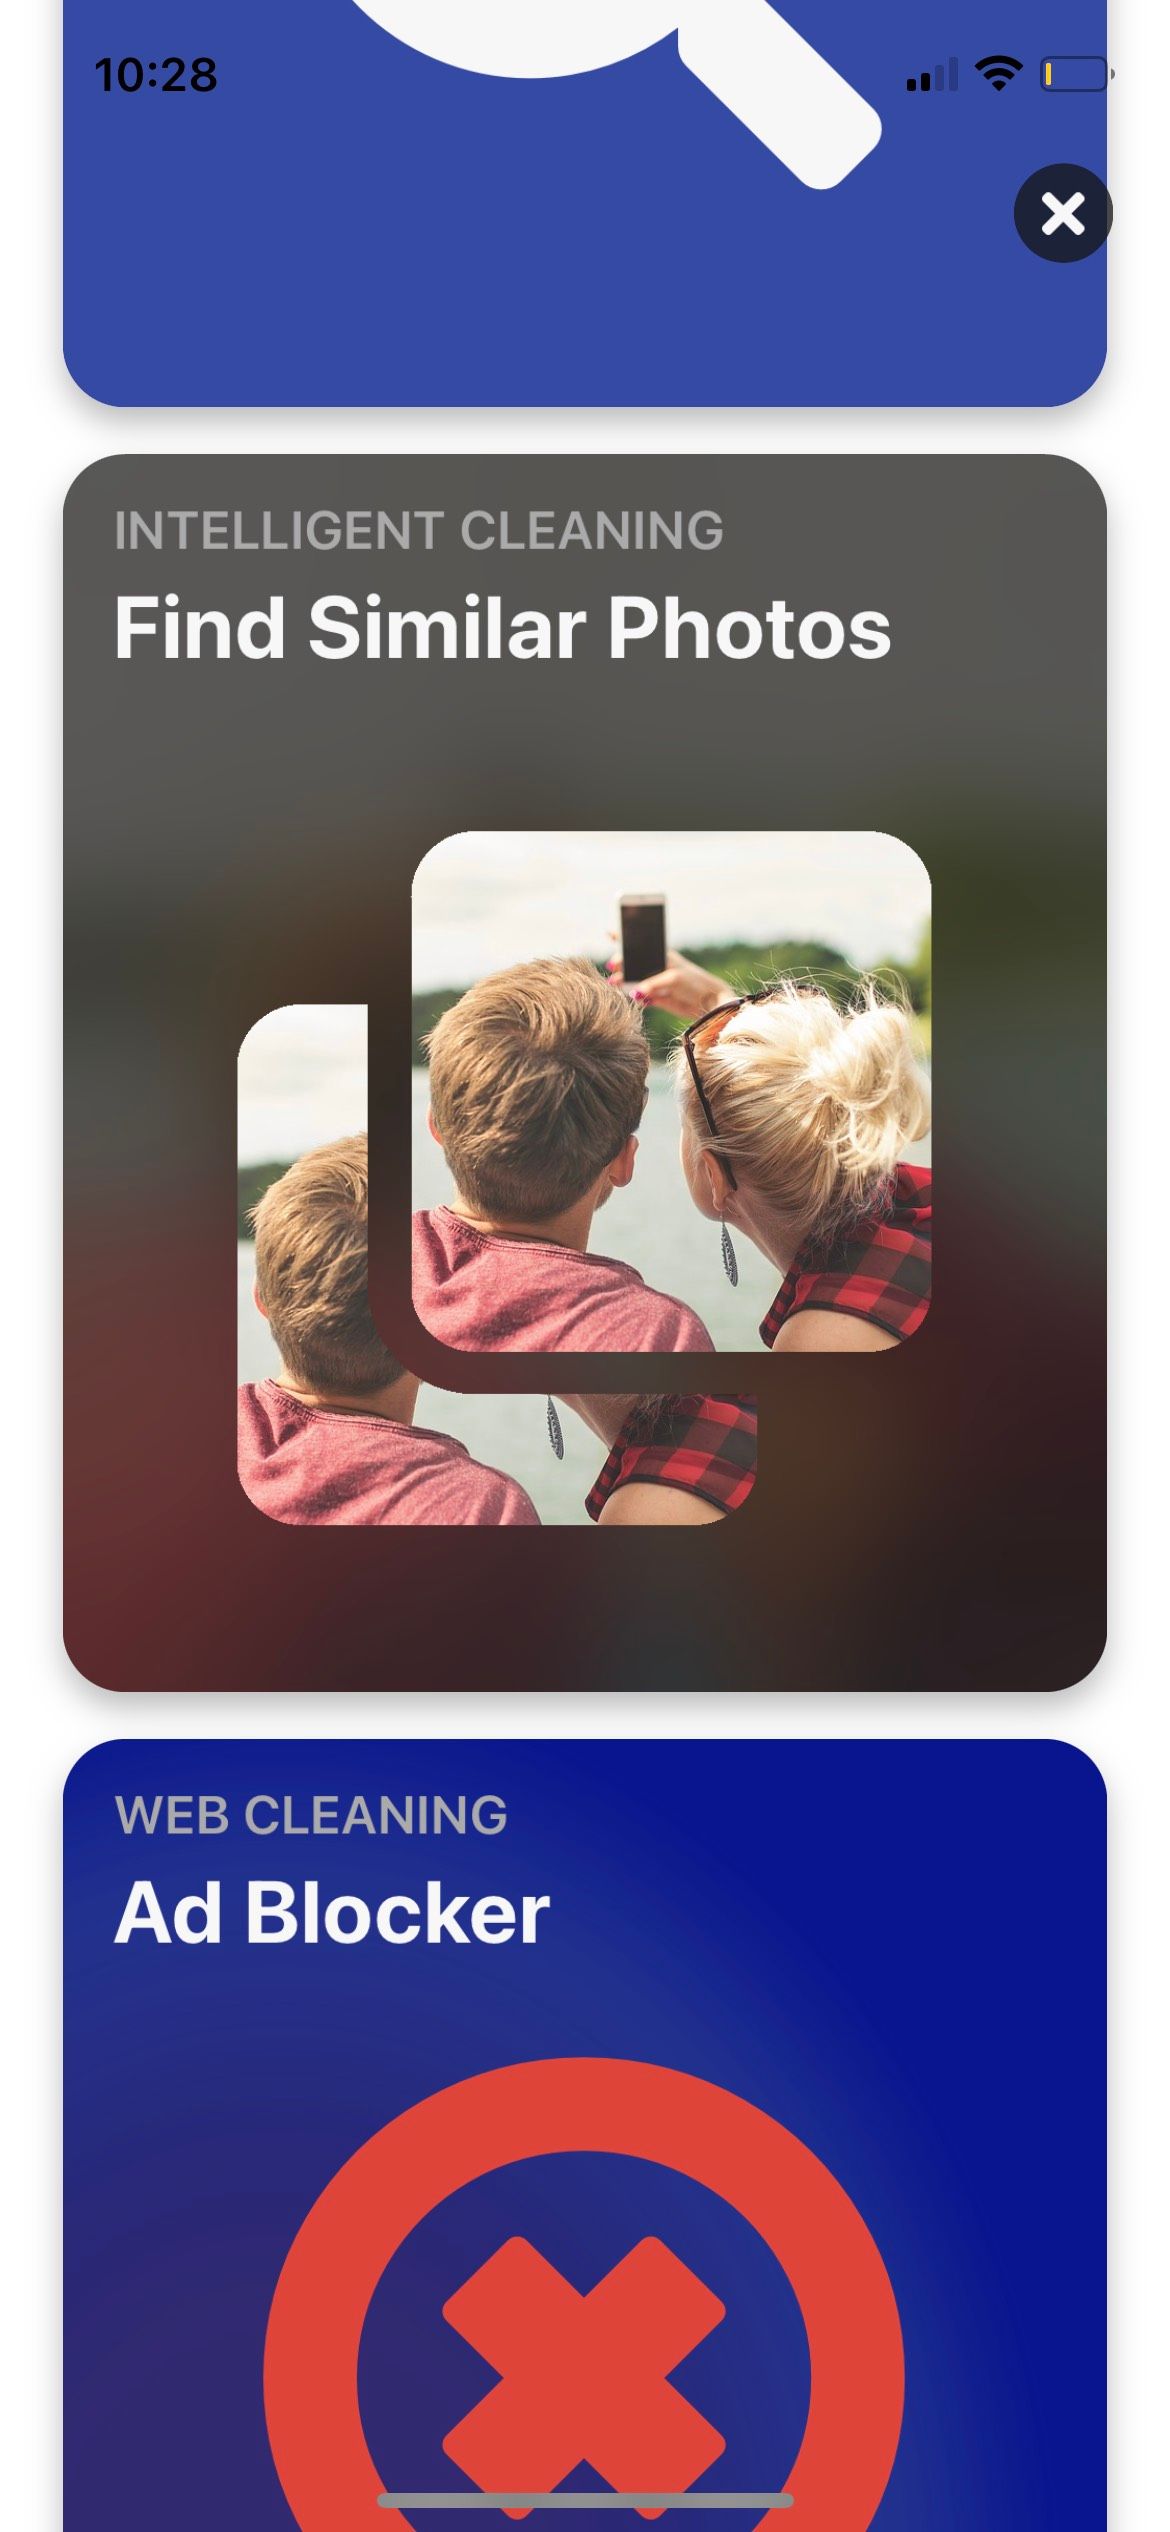 Phone Cleaner similar photos